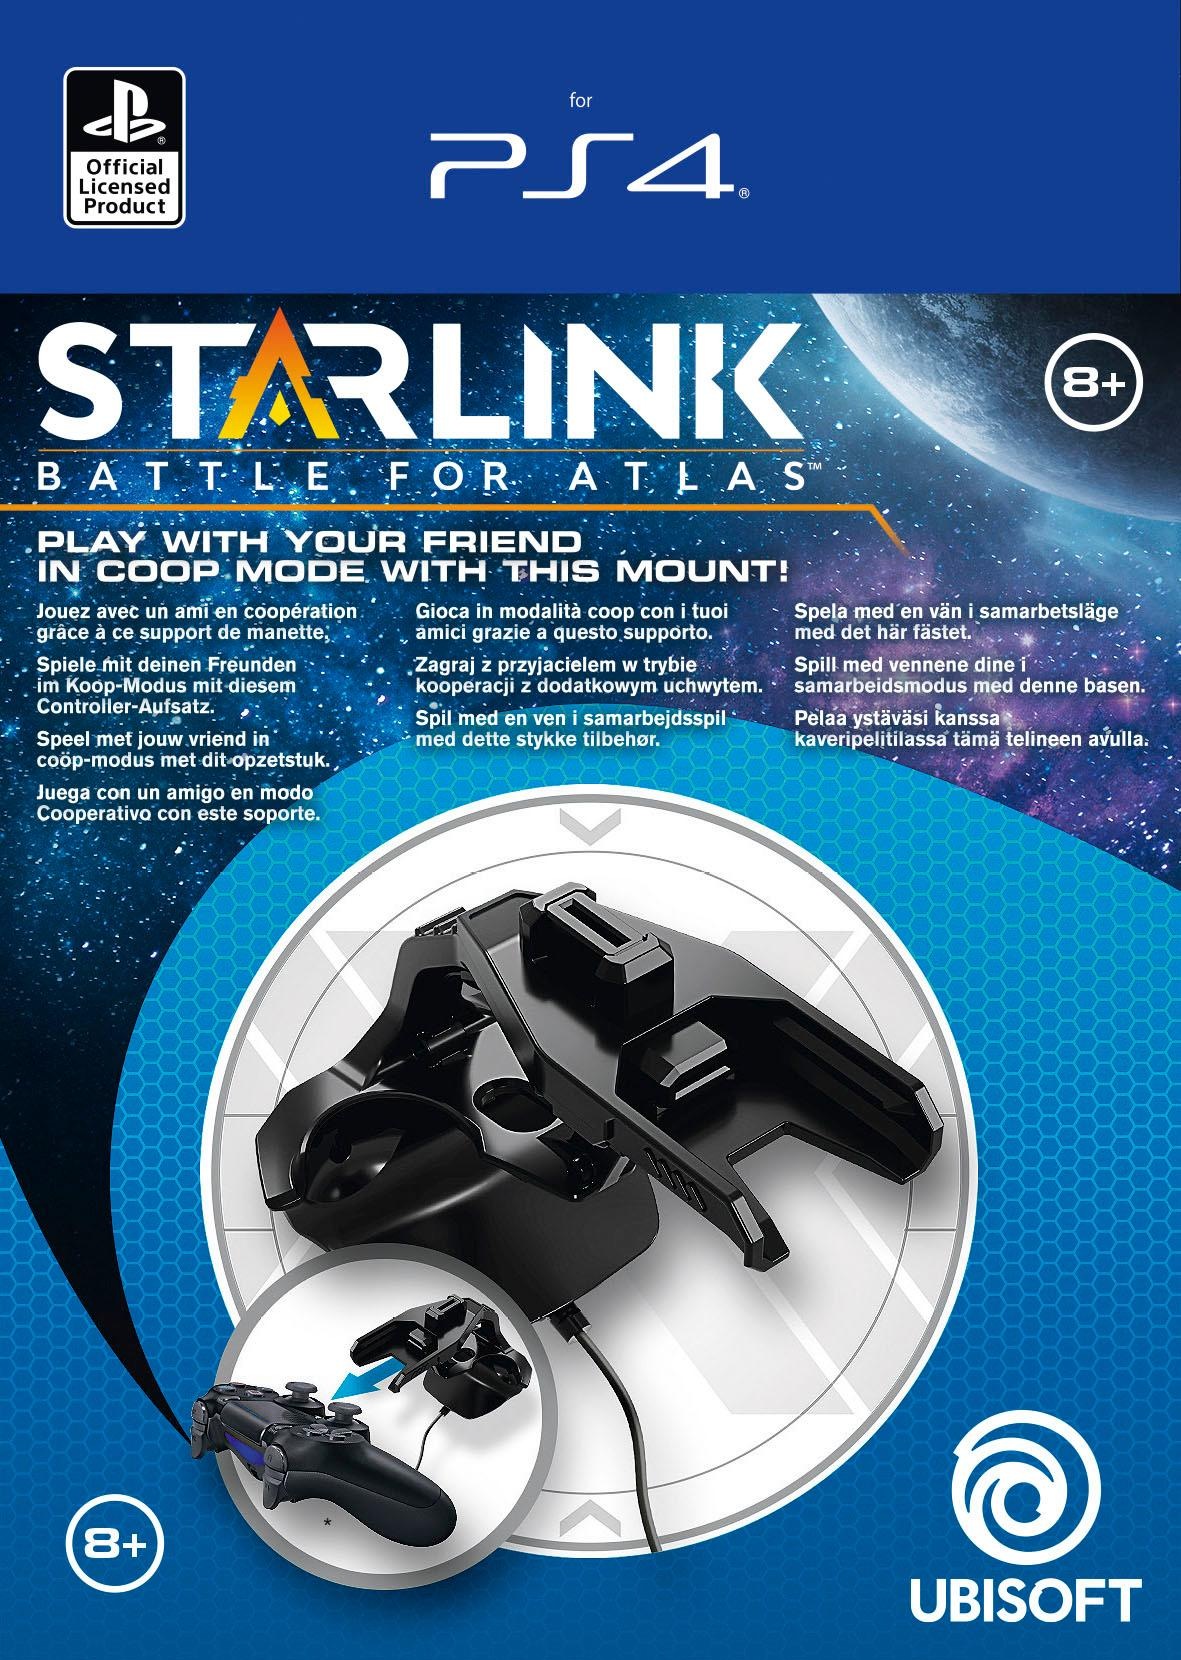 PS4 Starlink MOUNT CO-OP Pack Controller Adapter ...